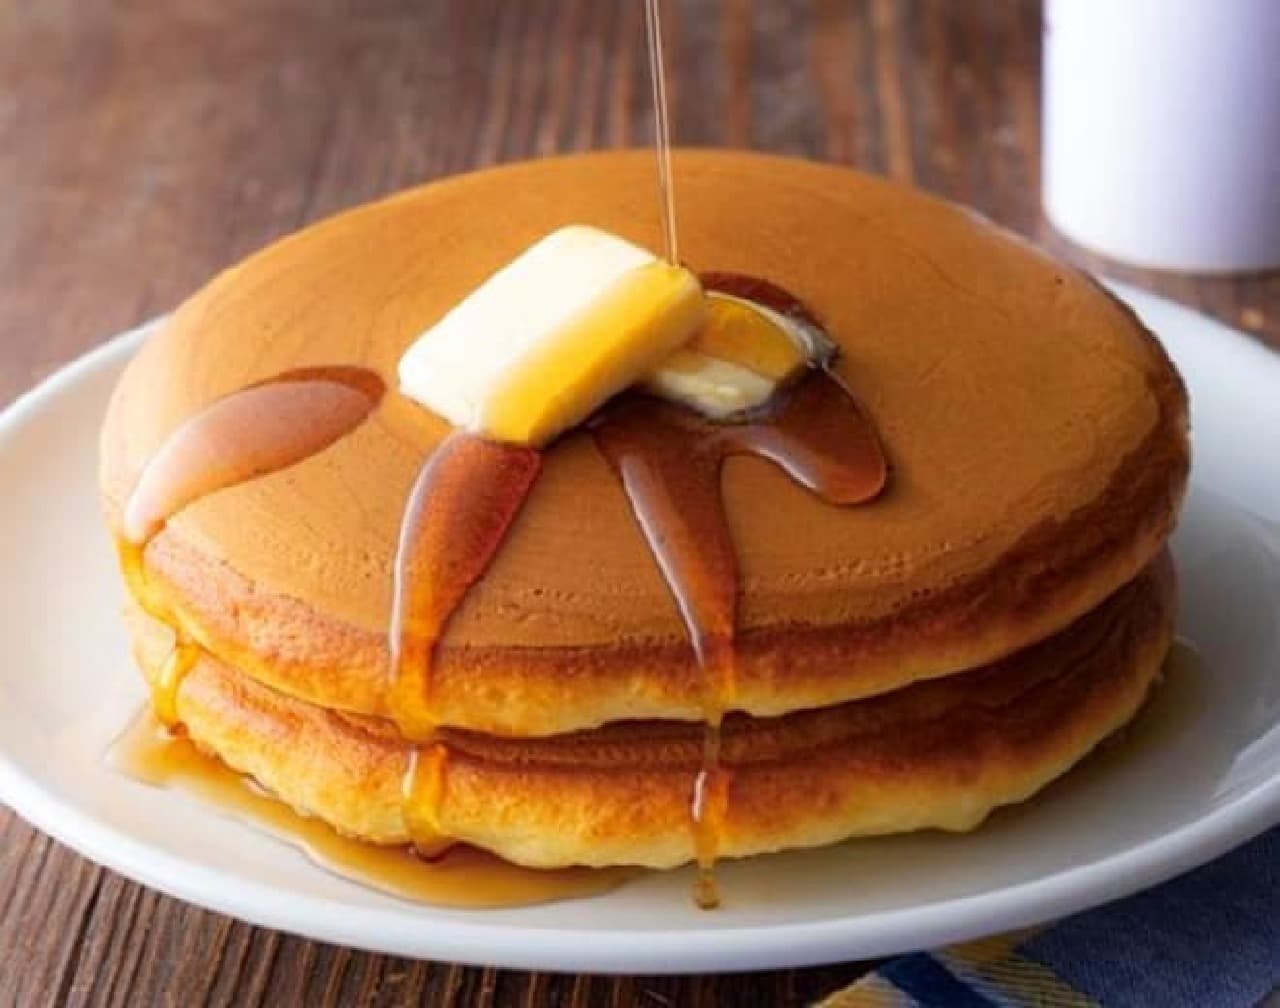 Ikebiz Cafe "IKB17 Pancakes - with Pure Maple Syrup